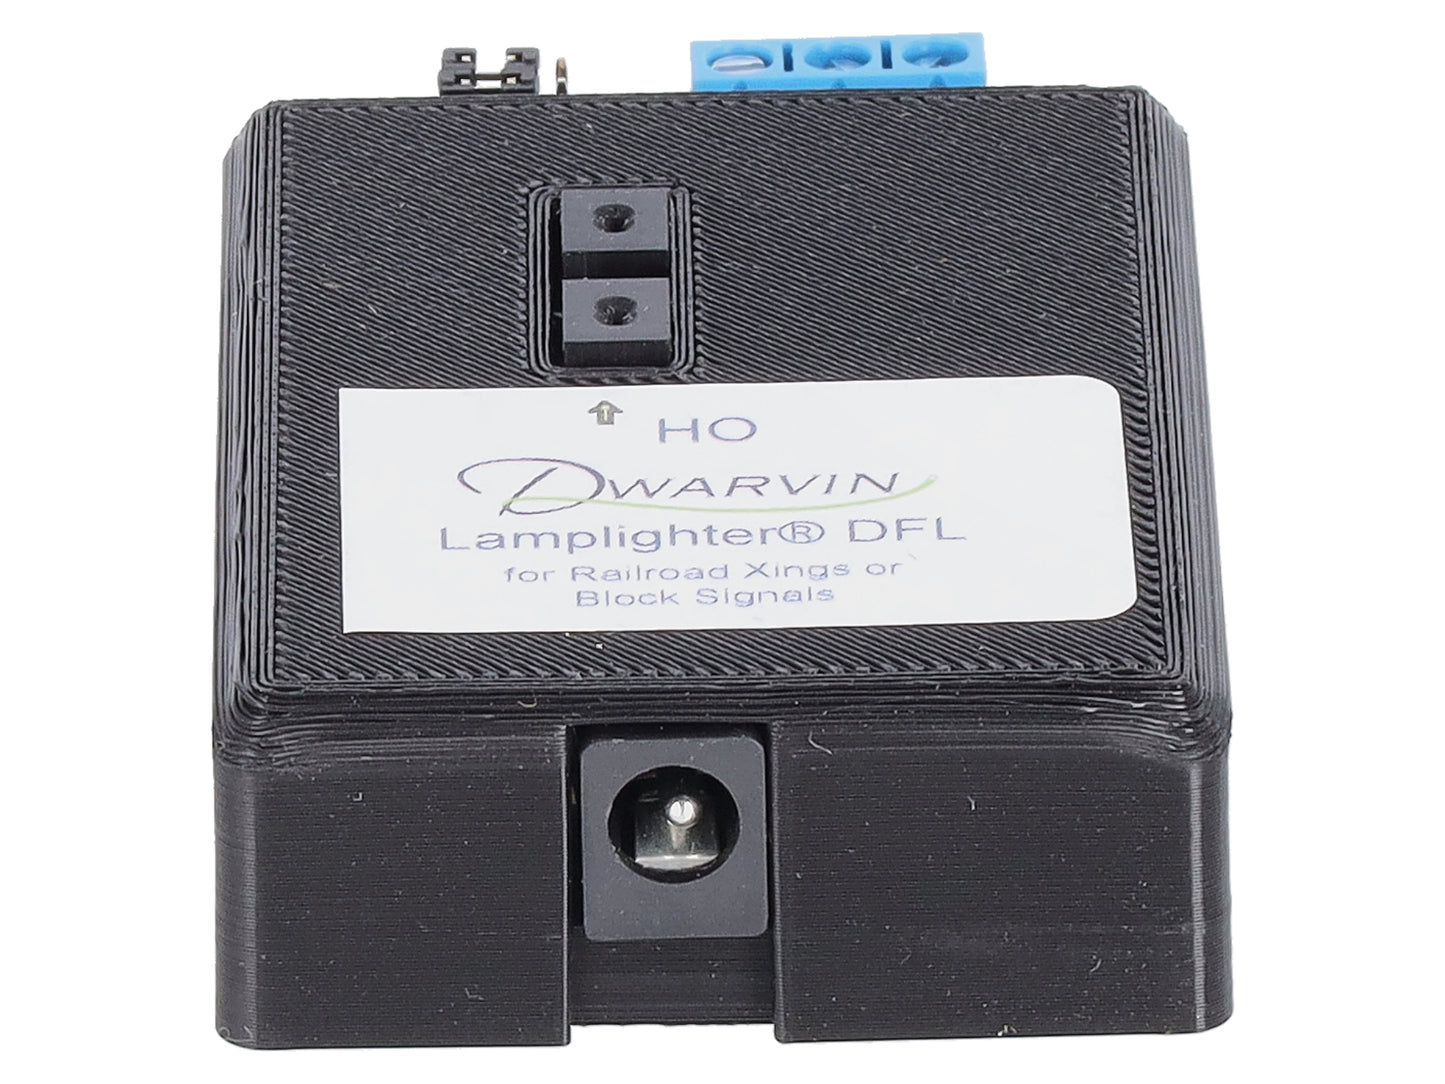 Dwarvin DVDFL101 HO Lamplighter DFL w/Power Supply for Fiber Lighting Systems